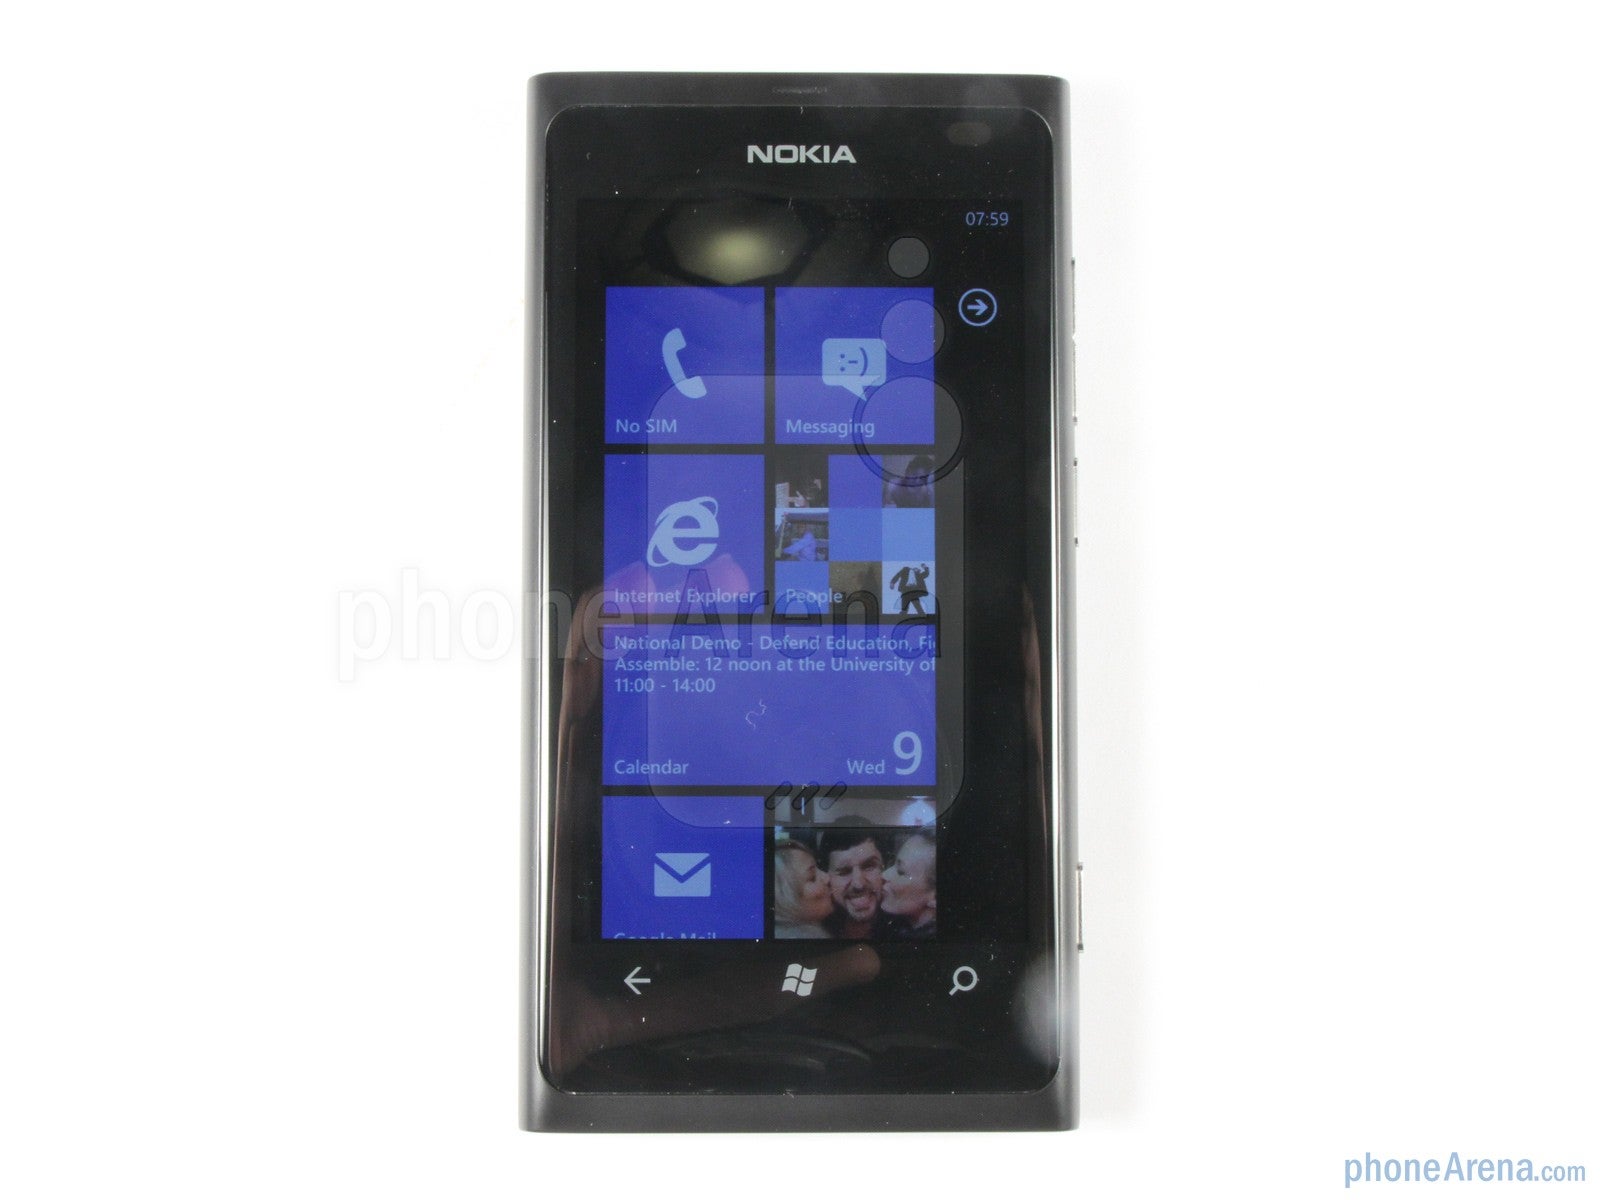 The Nokia Lumia 800 has a Clear Black AMOLED display - Nokia Lumia 800 Review